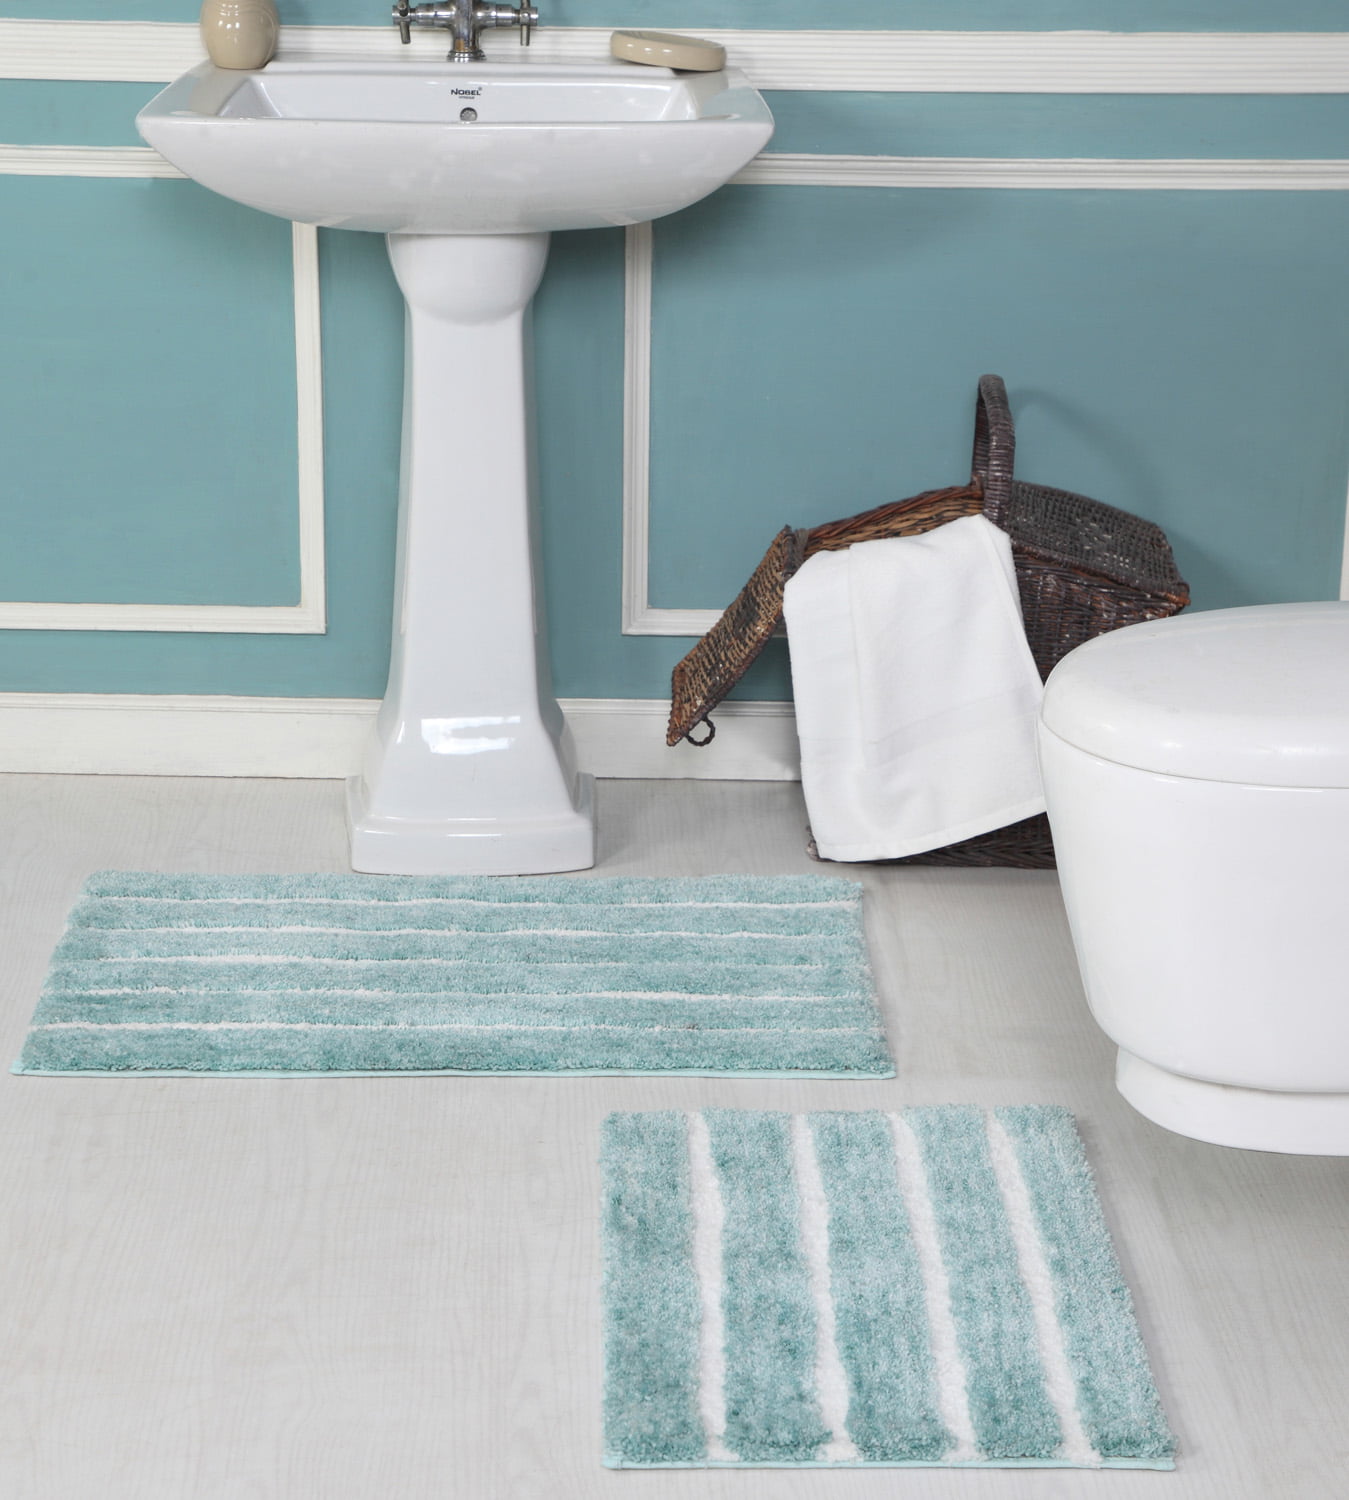 H.VERSAILTEX Turquoise Bathroom Rug, 2 Piece Bathroom Rug Set  Slip-Resistant Extra Absorbent Soft and Fluffy Thick Striped Bath Mat Shag  Floor